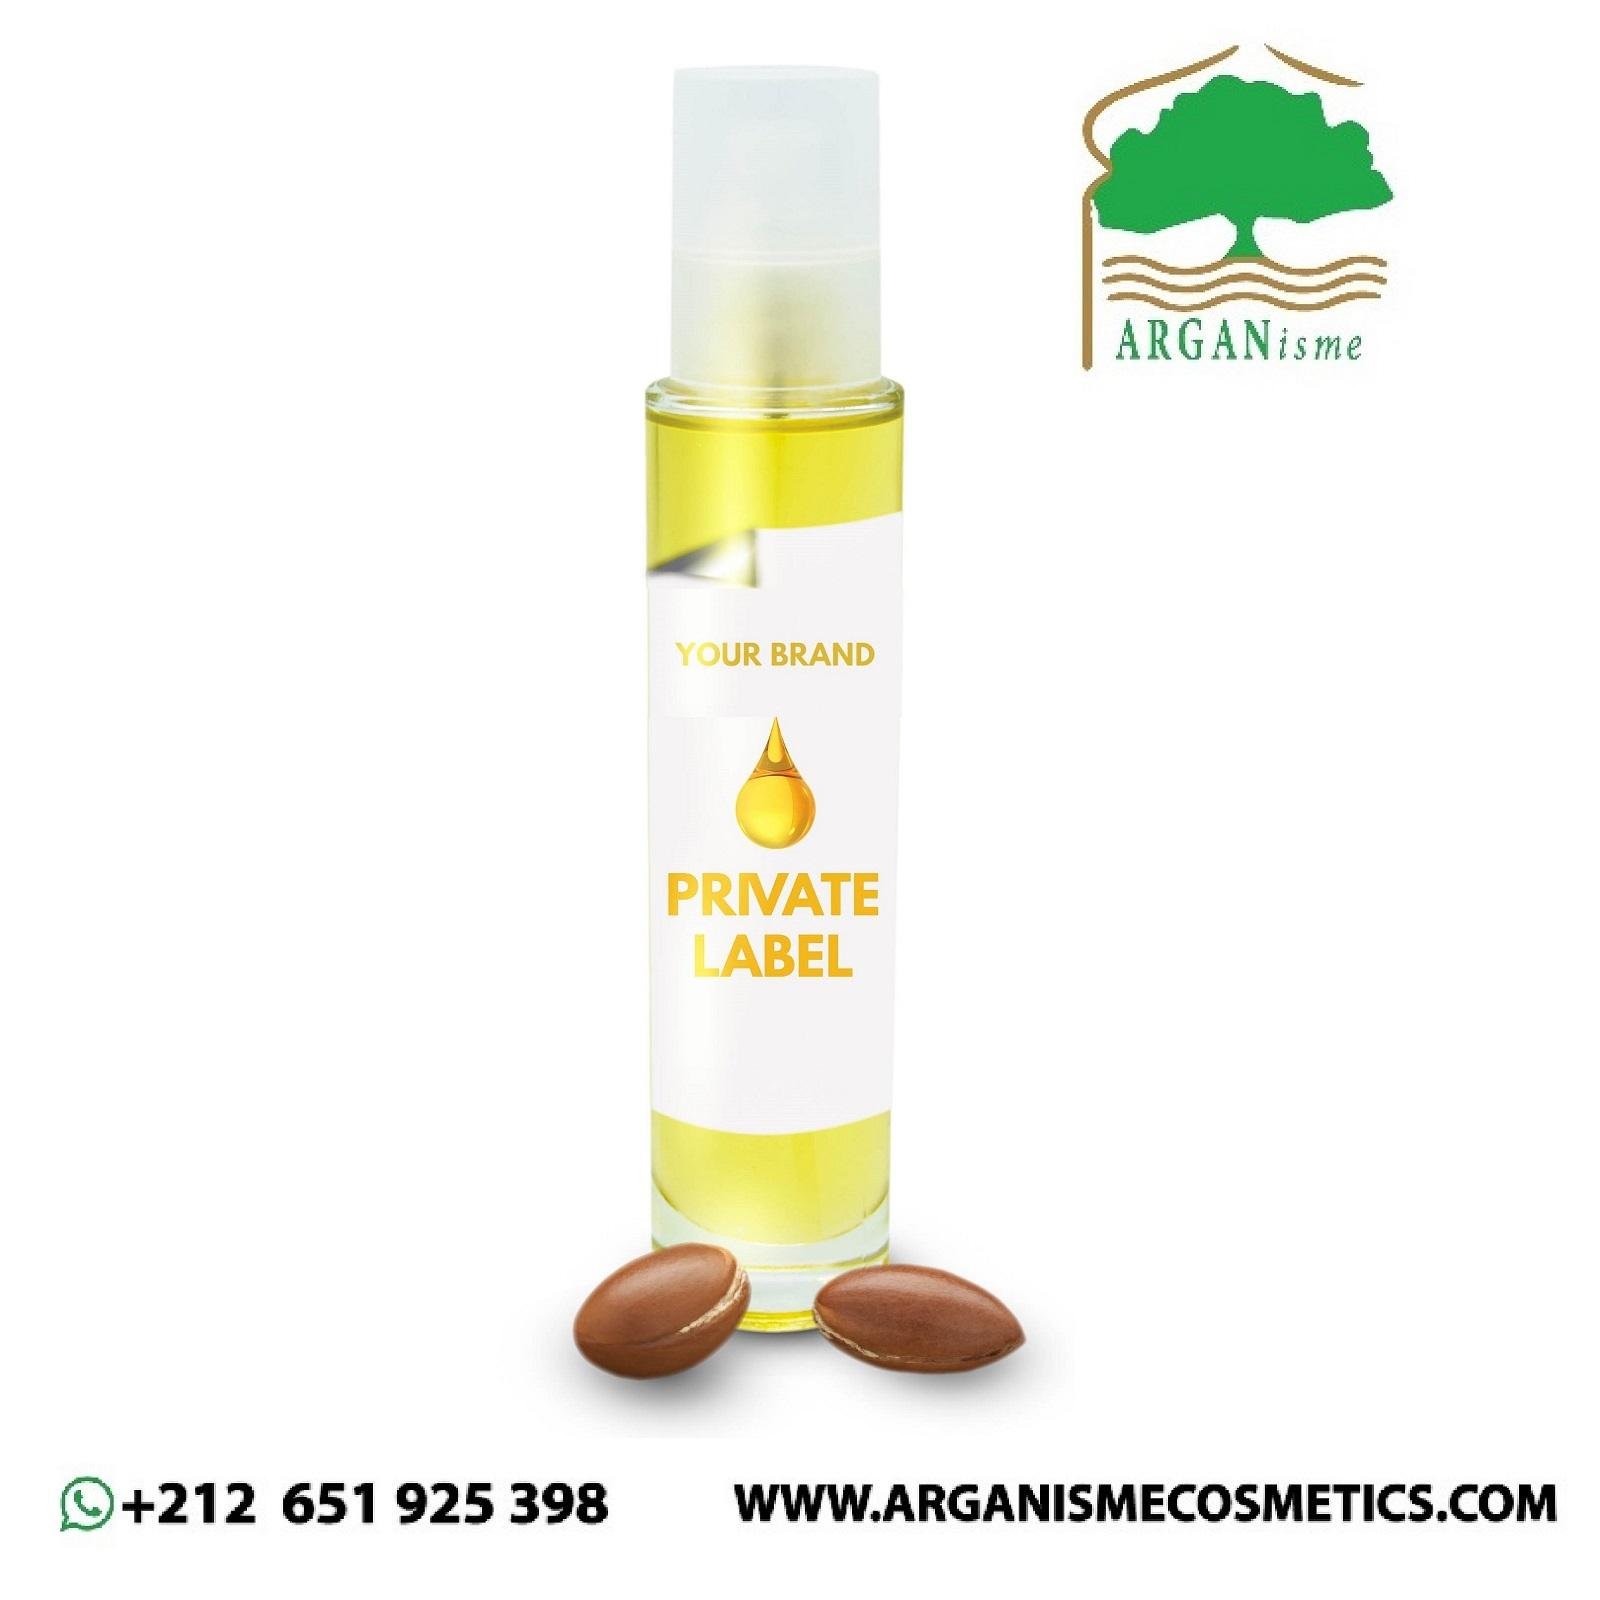 Producer of virgin Argan oil from Morocco 2